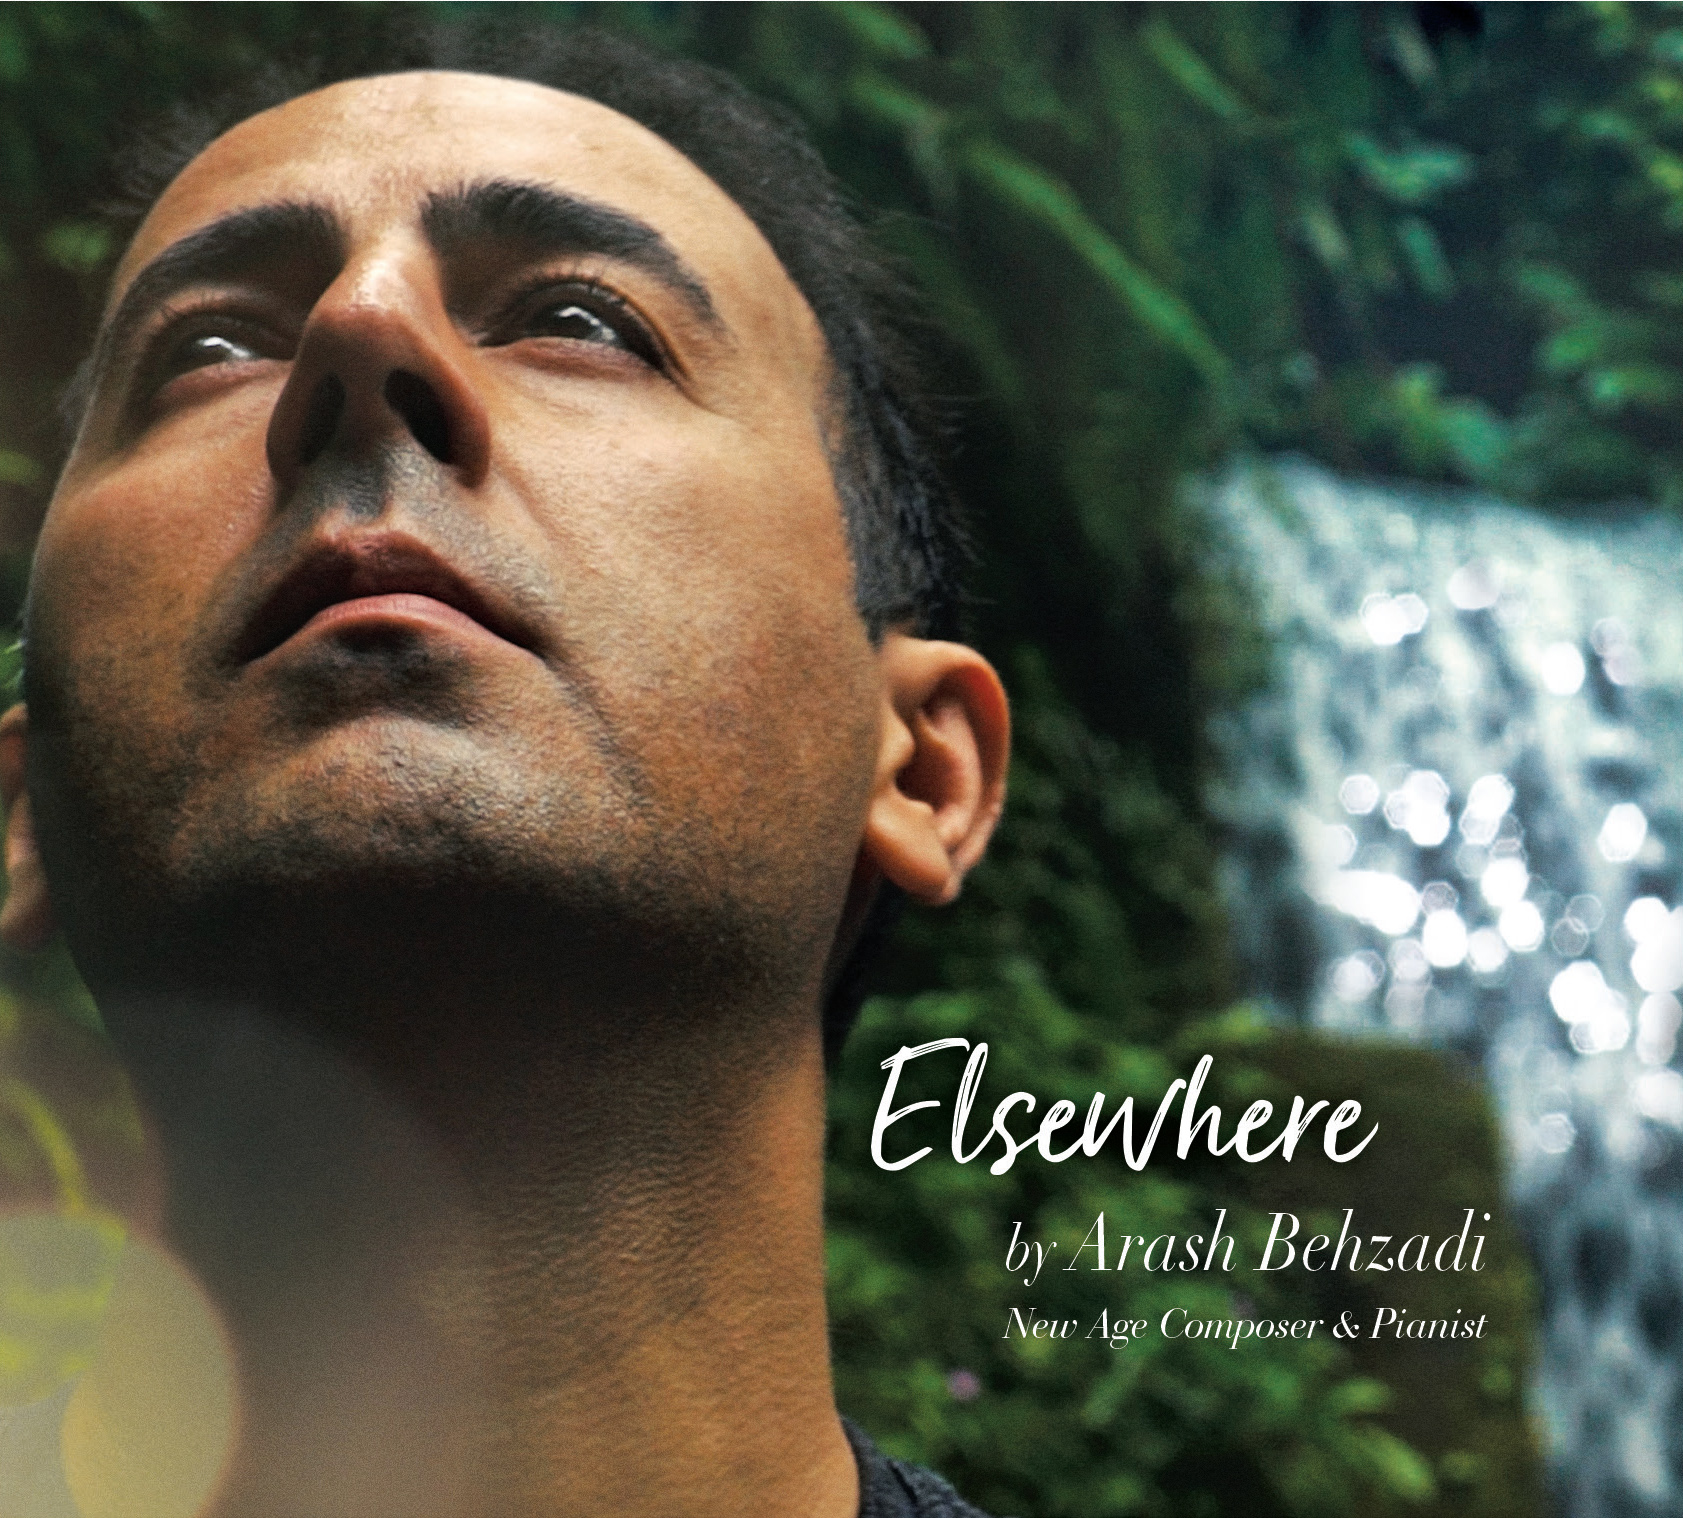 Elsewhere Album Cover
Pictured, Arash Behzadi
Photography by: afreelancehuman https://www.instagram.com/afreelancehuman/
Design by: Alireza Atarian